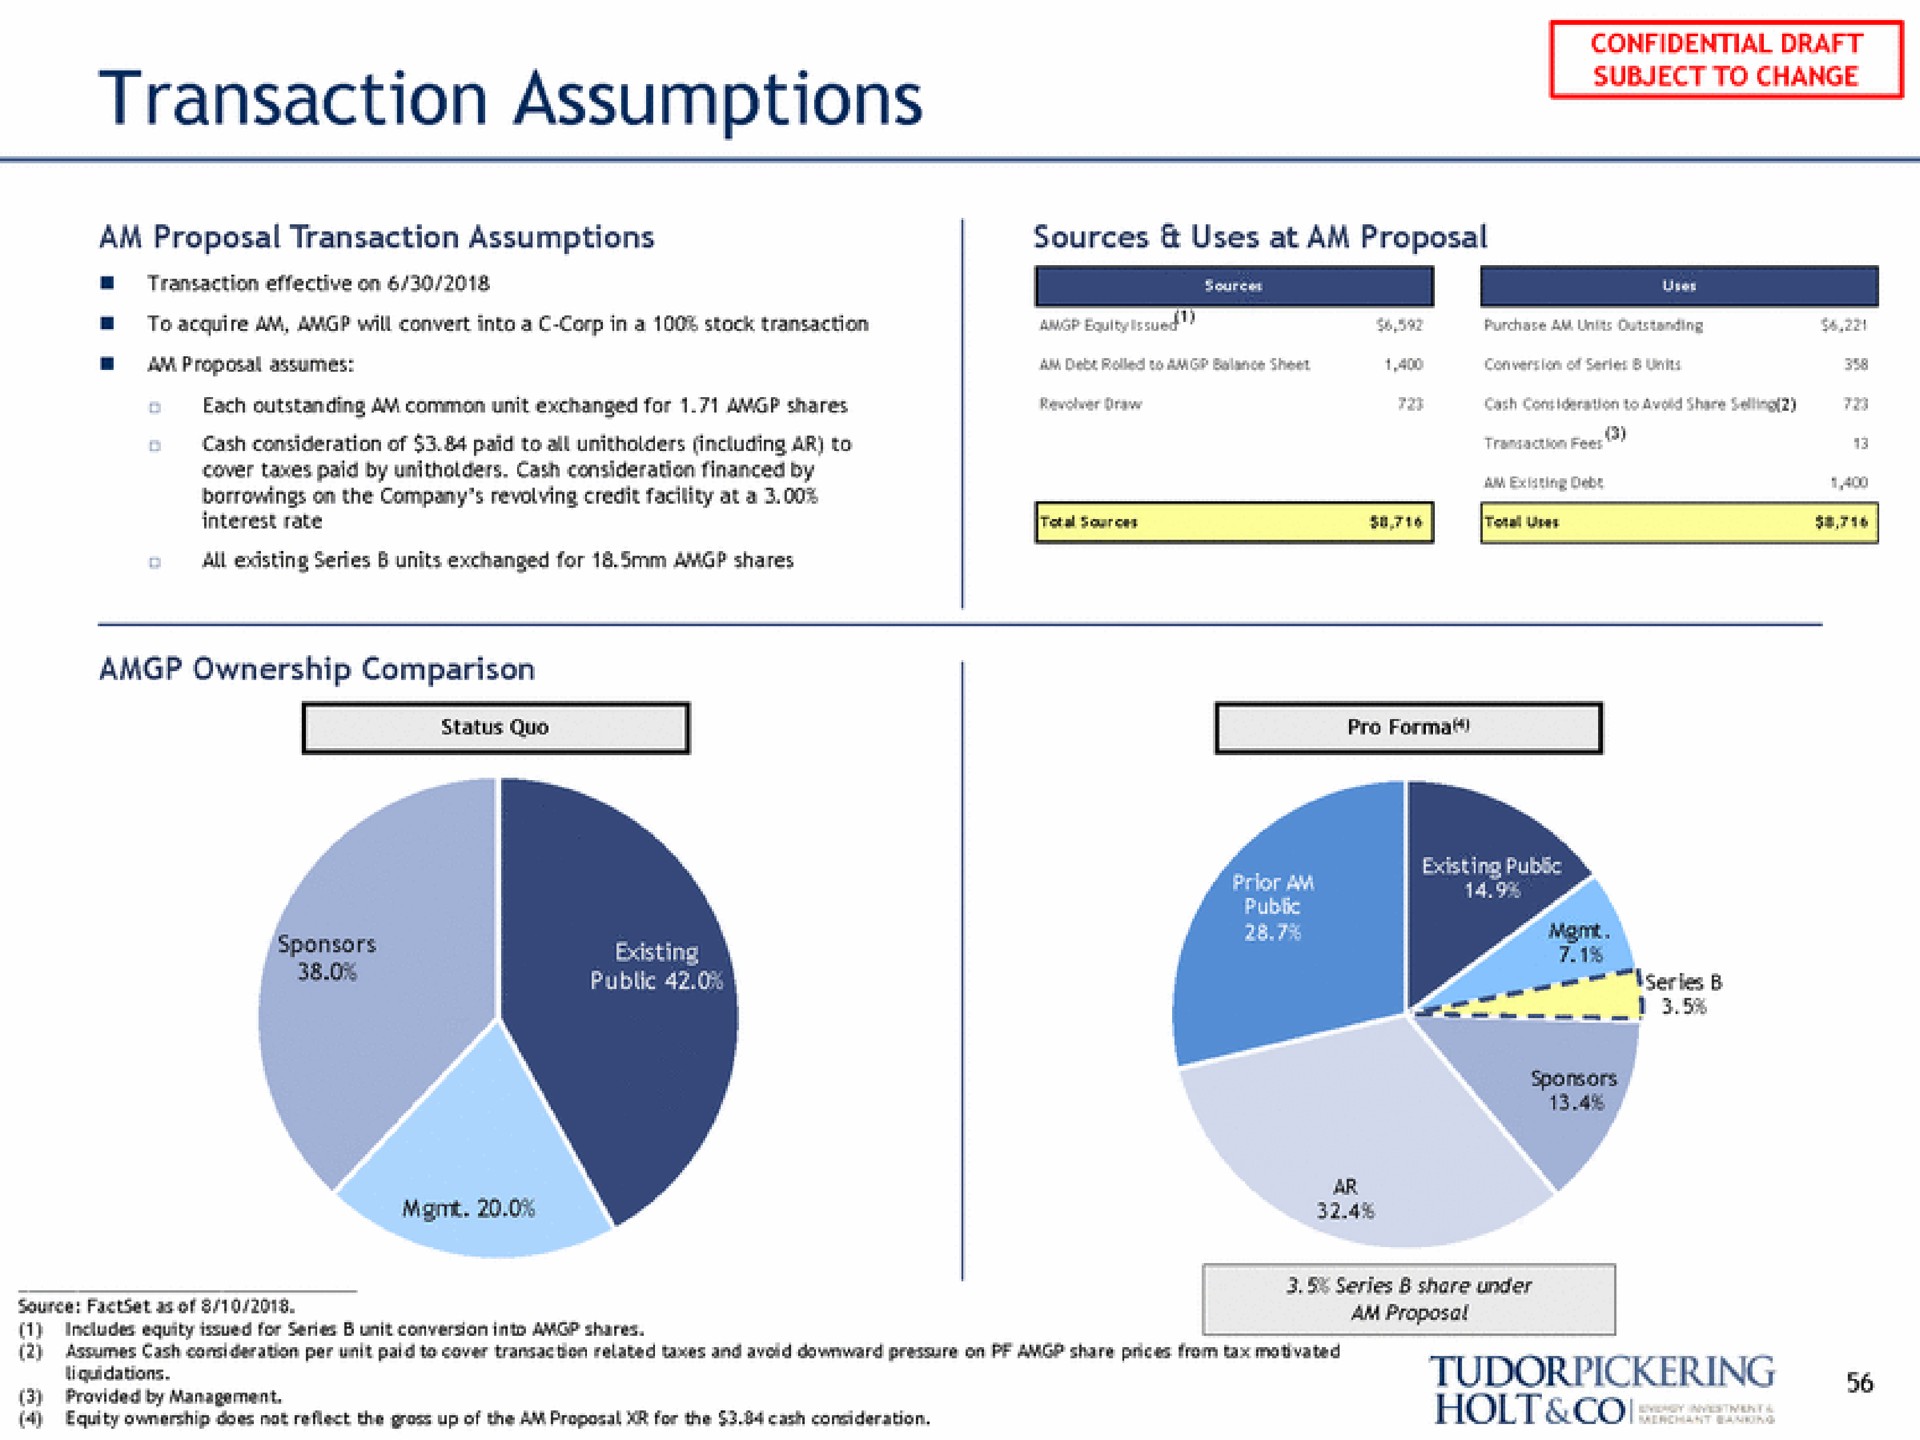 transaction assumptions a | Tudor, Pickering, Holt & Co